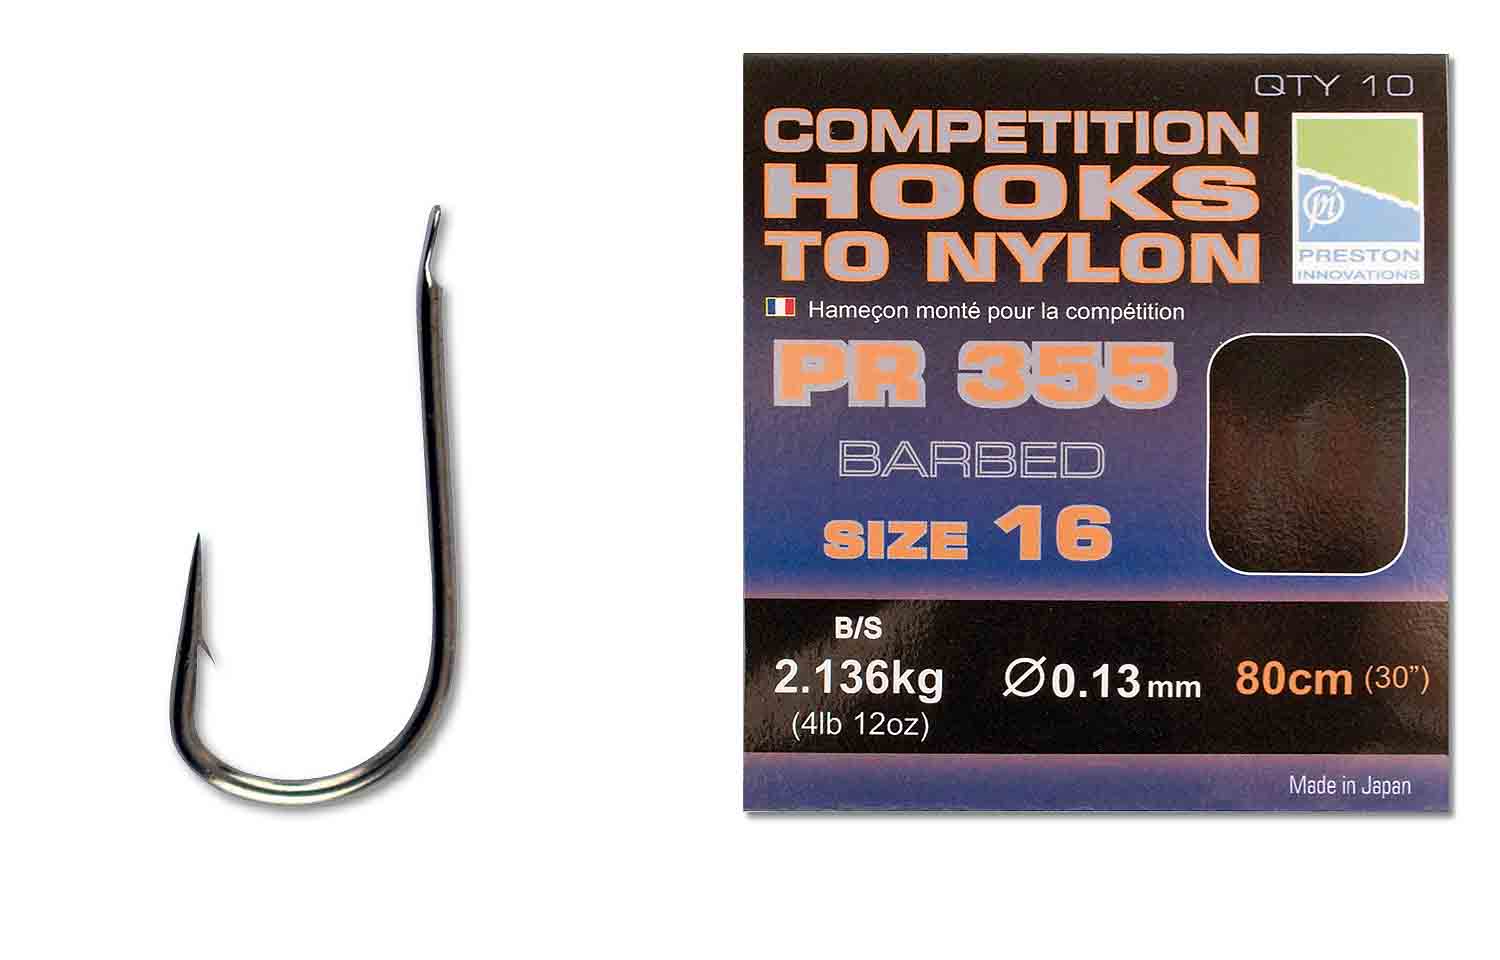 Preston Competition Hook To Nylon PR355